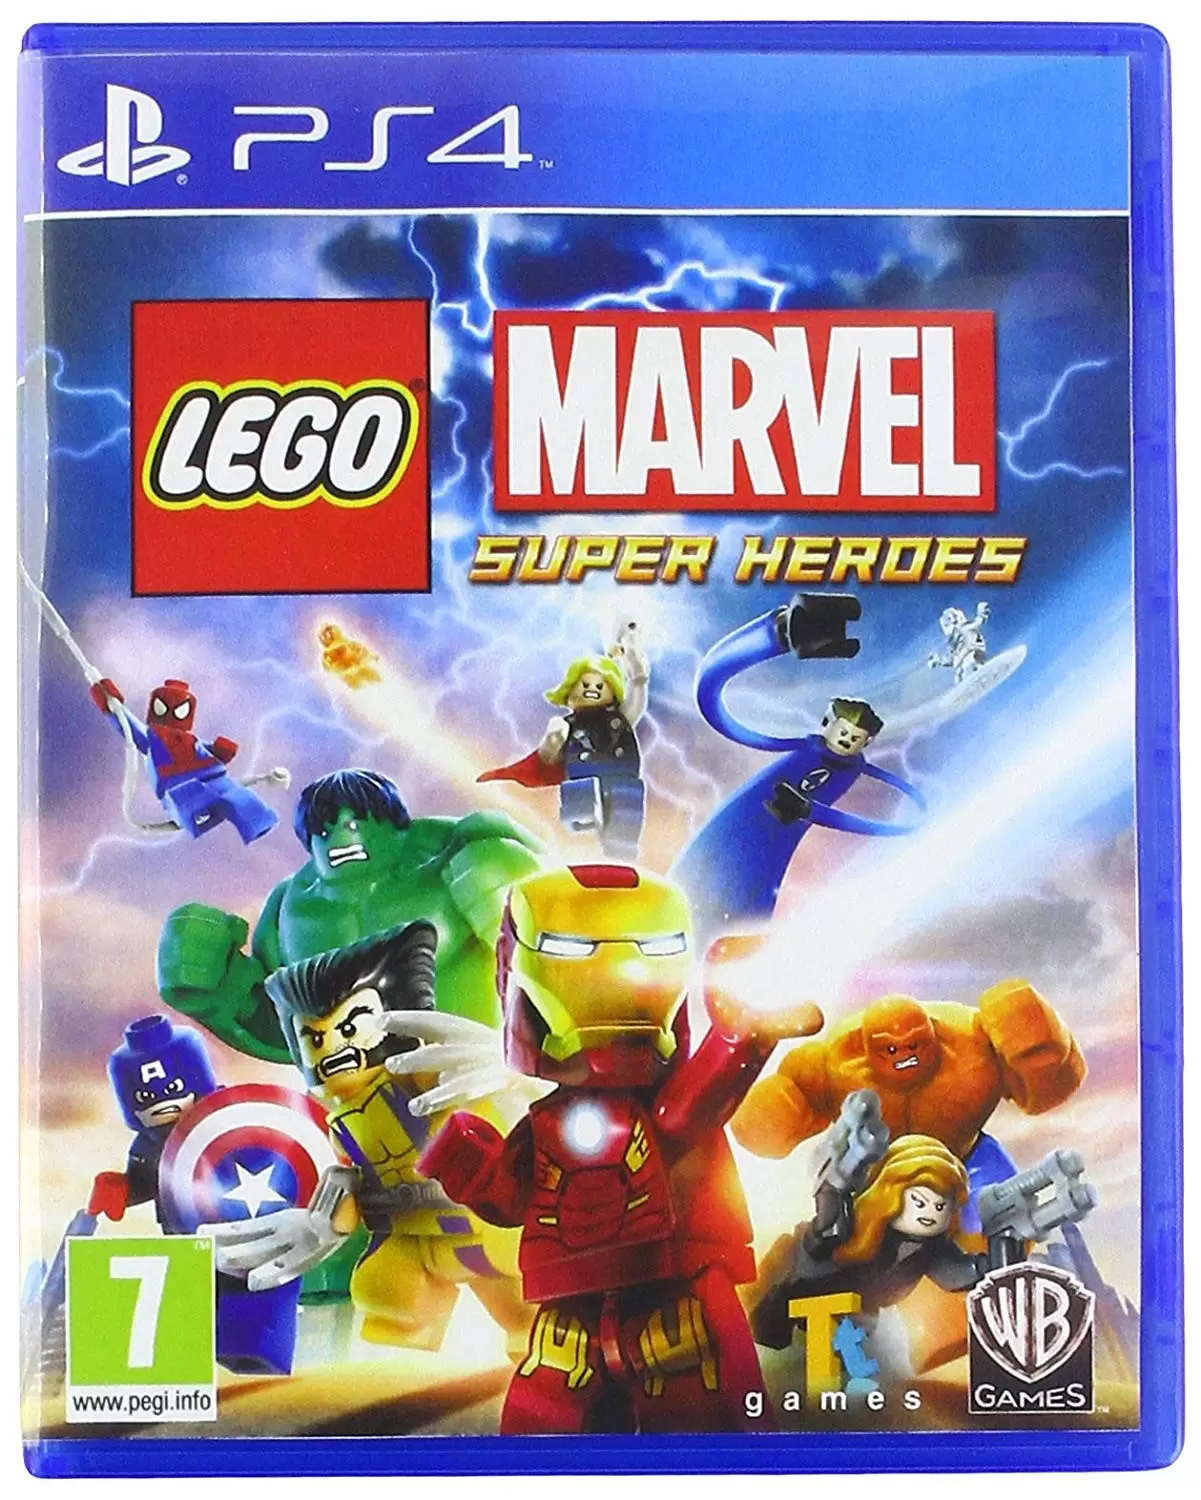 PS4 Games - LEGO Marvel Super Heroes